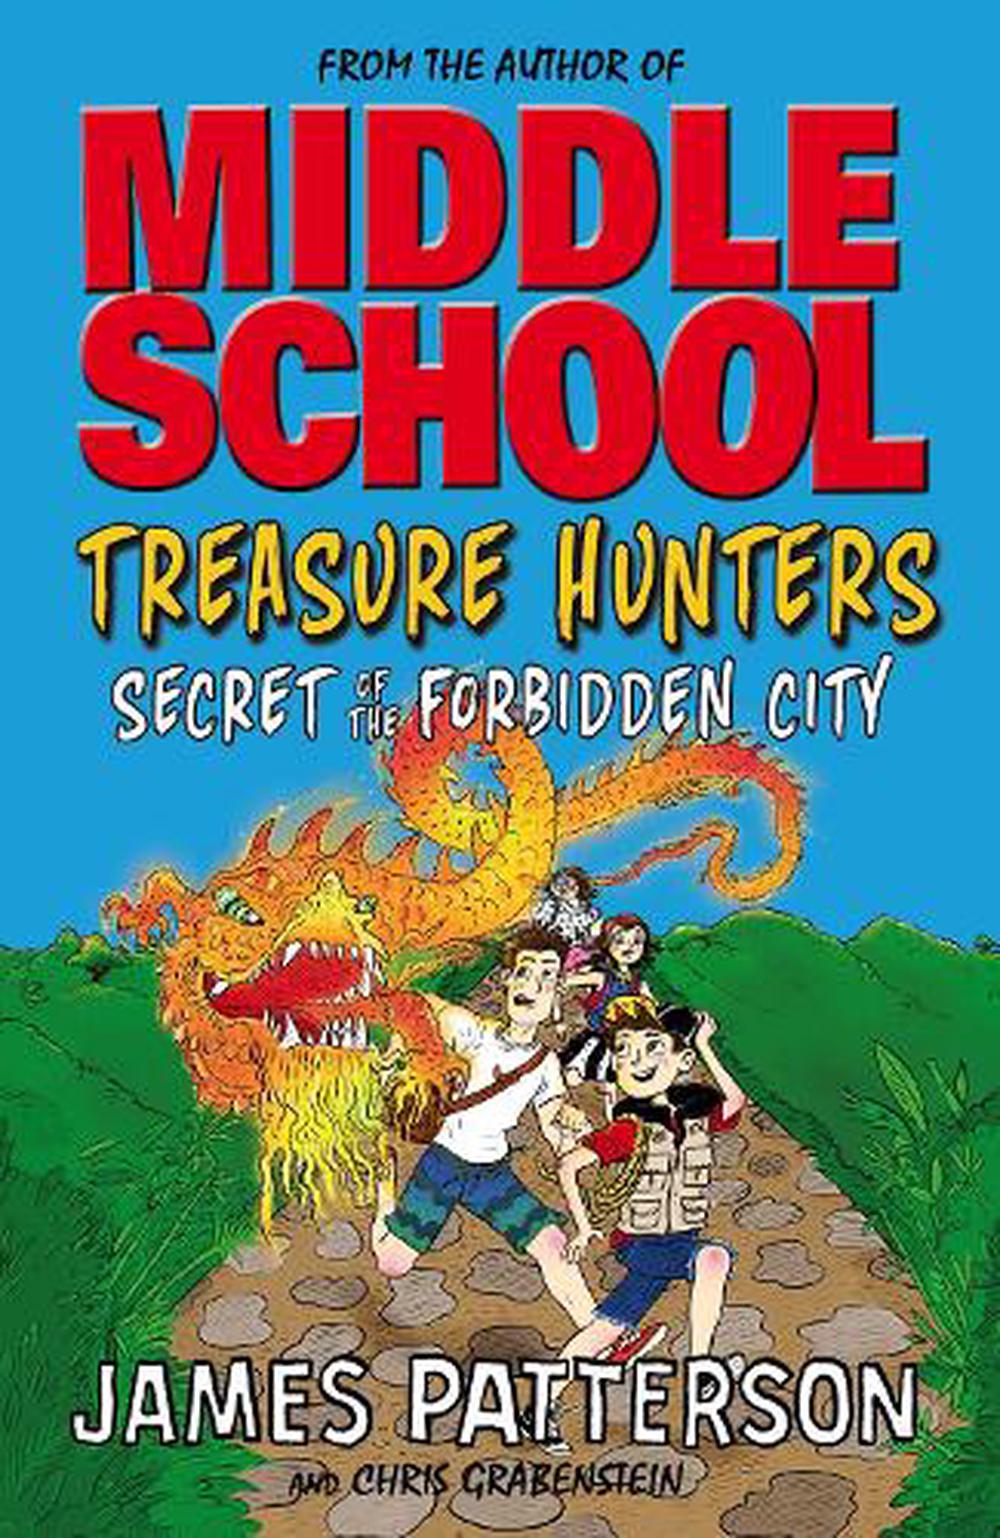 treasure hunters secret of the forbidden city